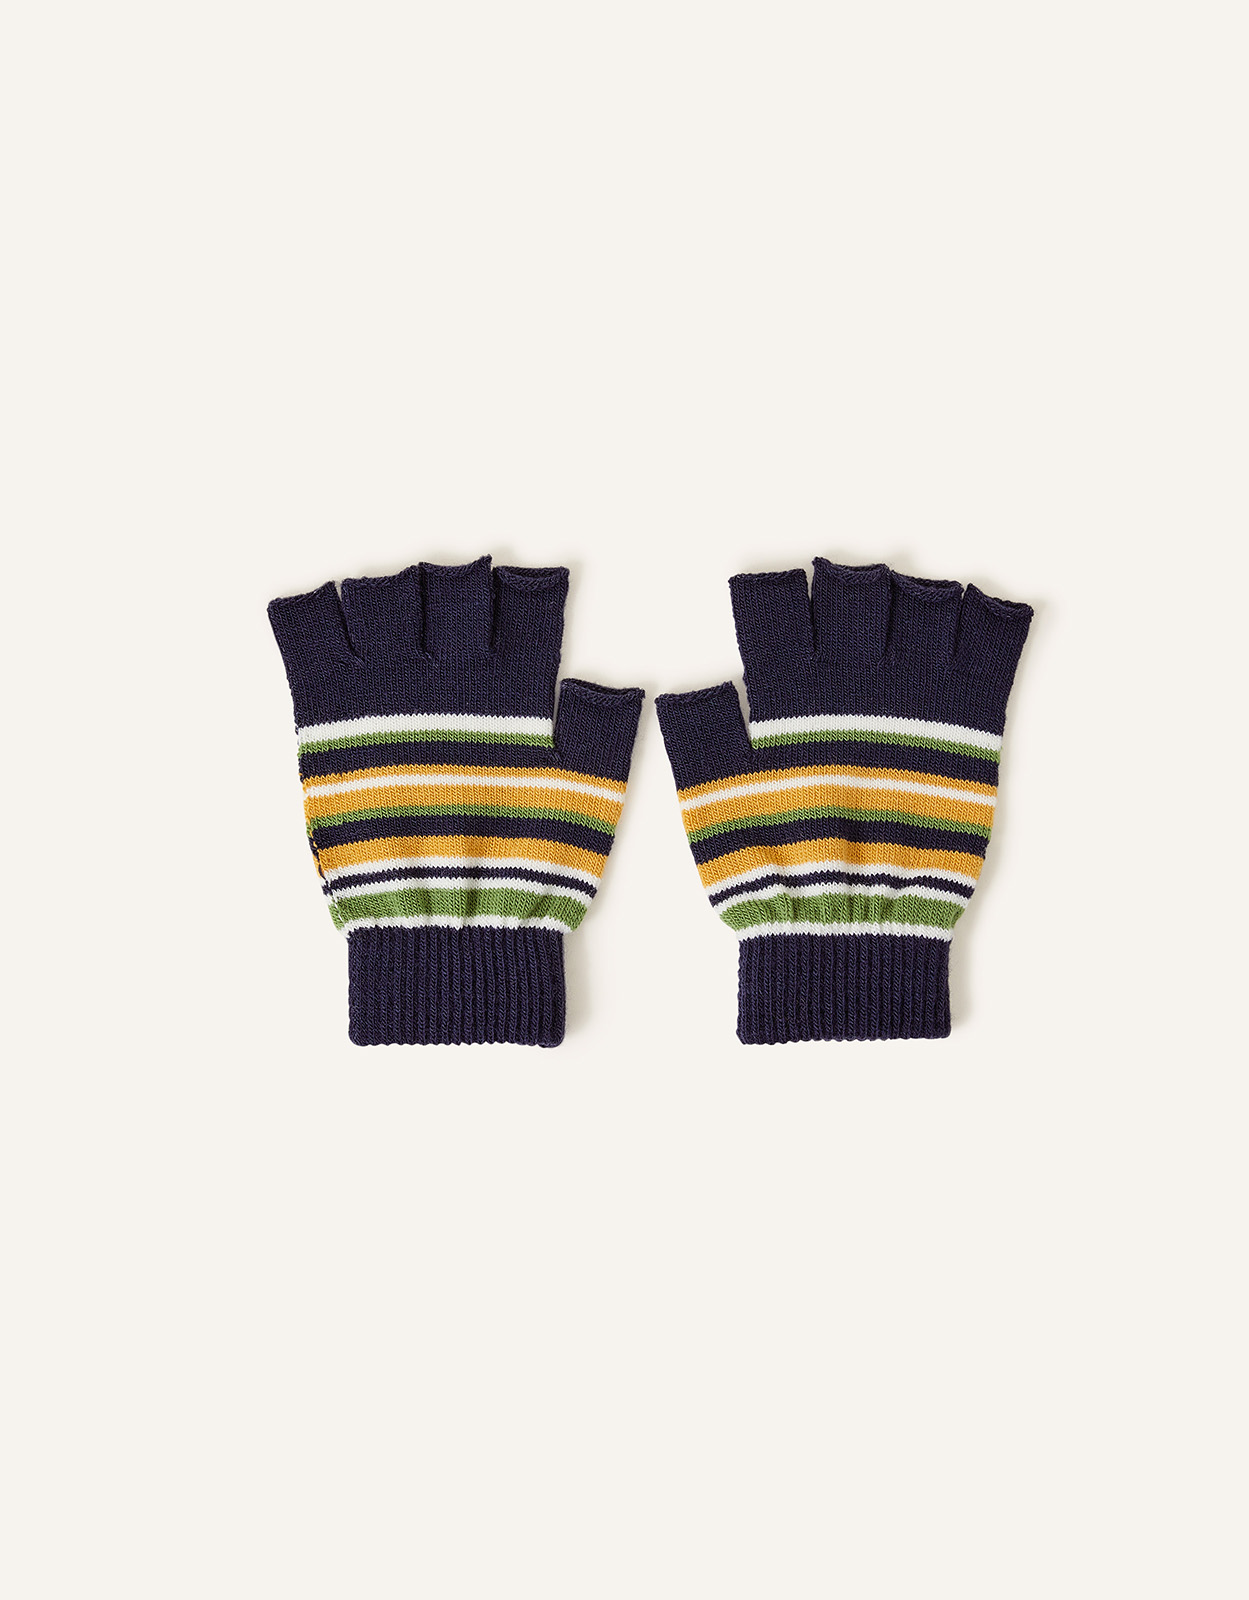 Accessorize Women's Blue/Green/White Stripe Fingerless Glove, Size: One Size